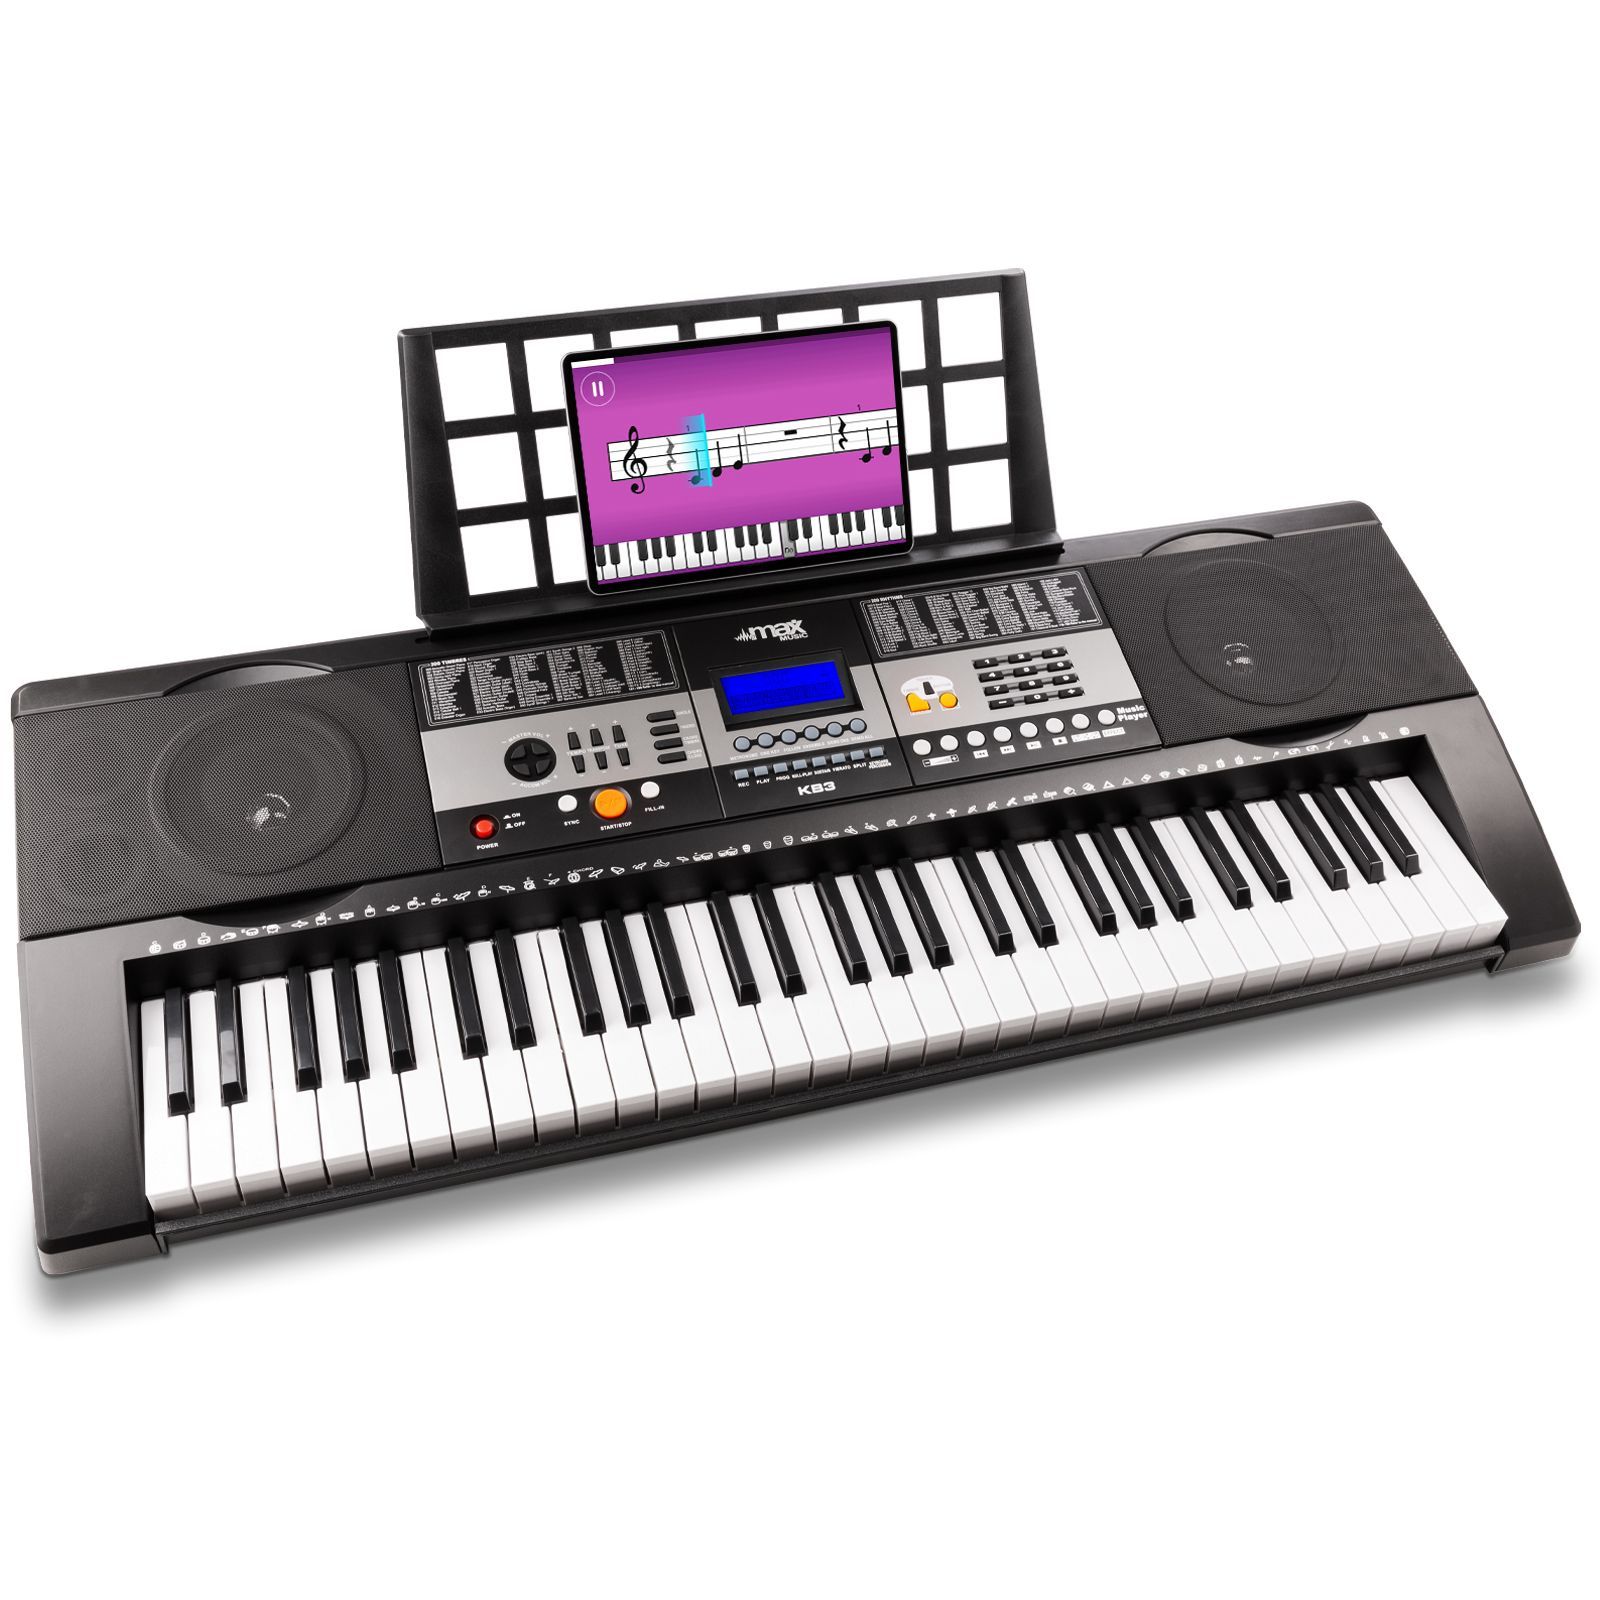 Retourdeal - MAX KB3 Keyboard met 61 aanslaggevoelige toetsen en mp3